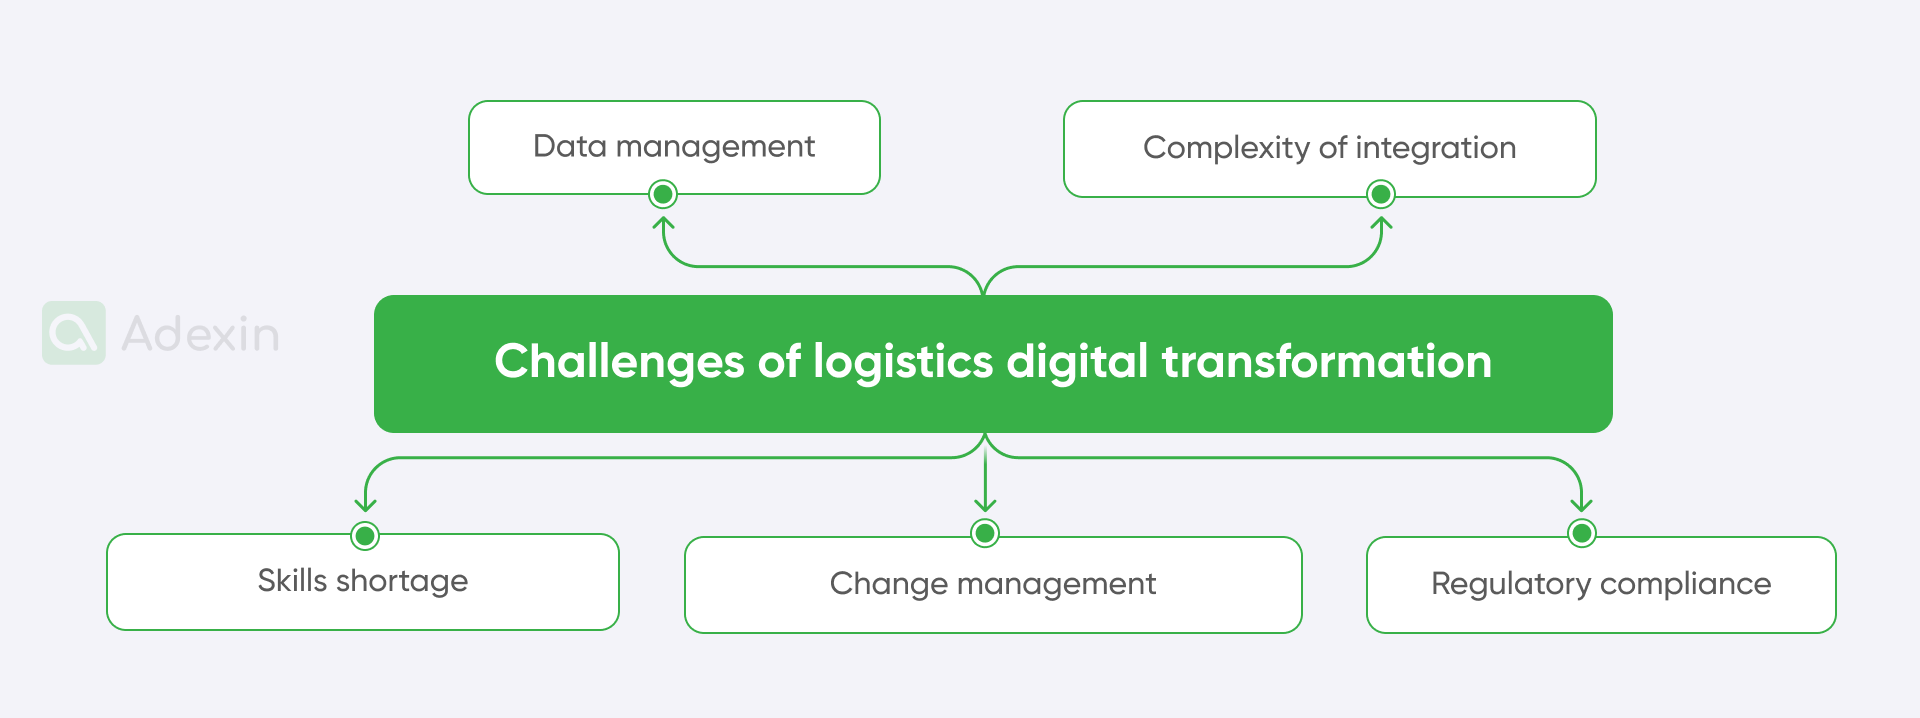 Elements of challenges of logistics digital transformation